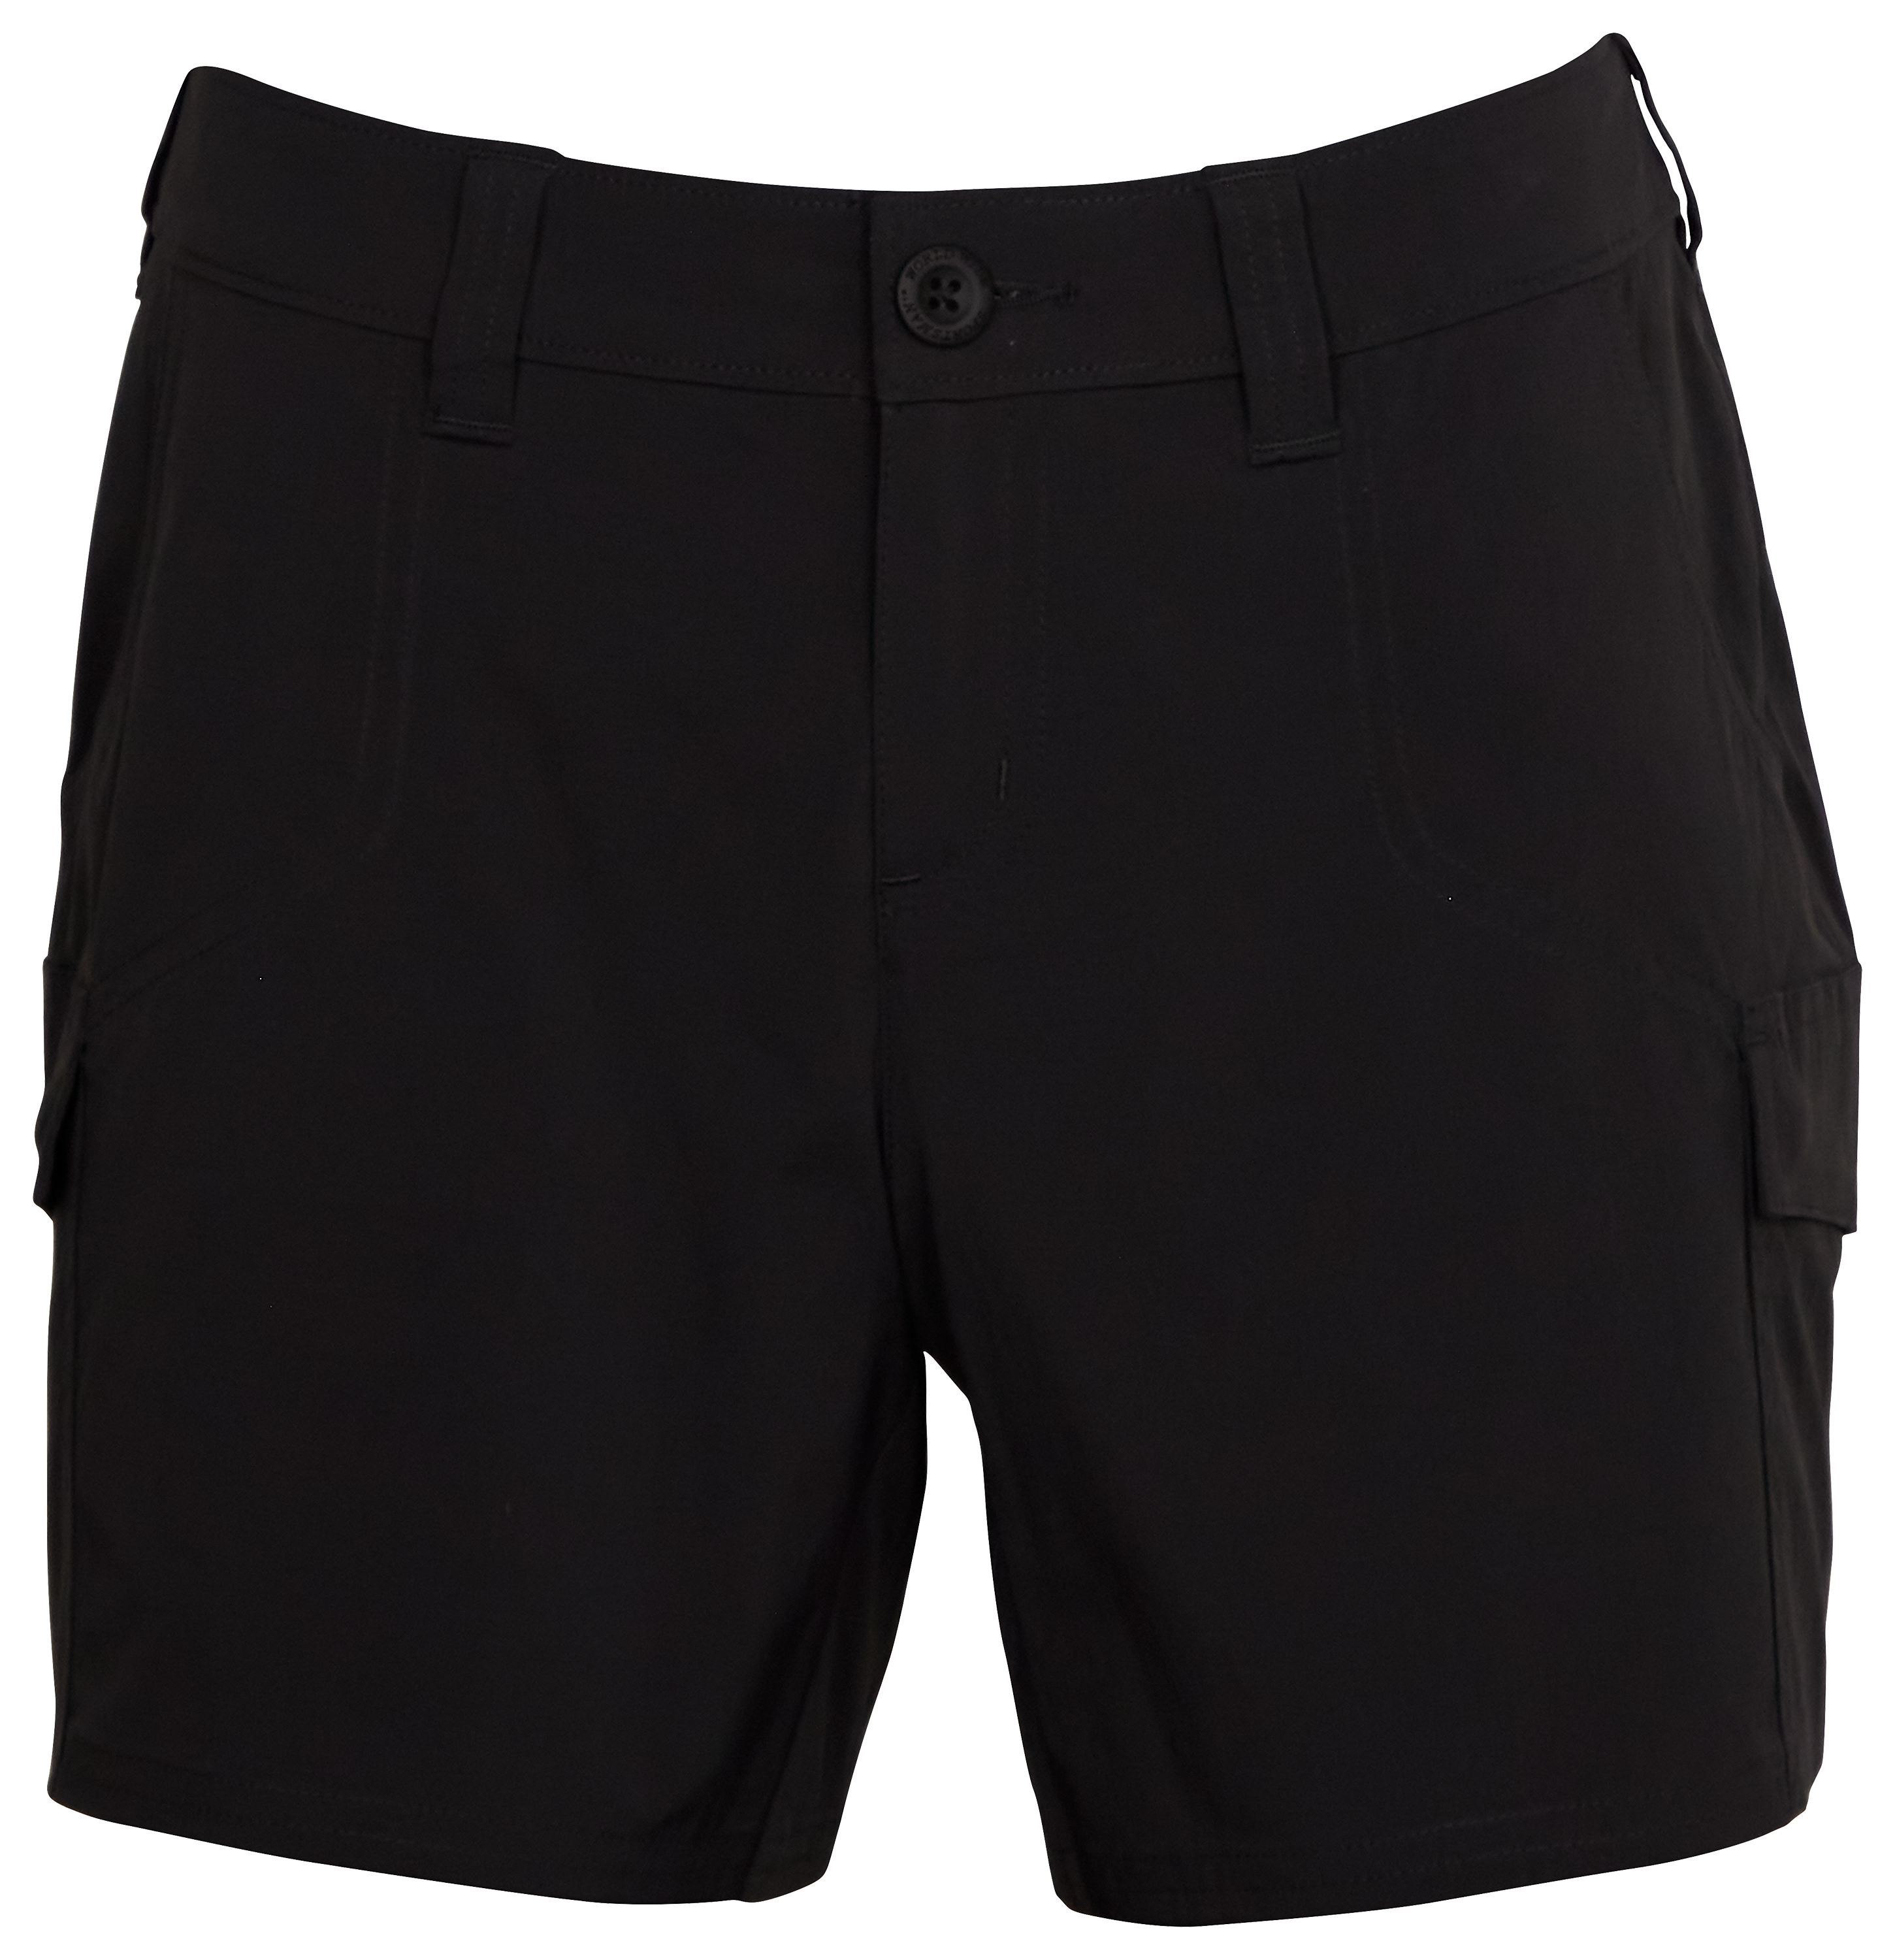 World Wide Sportsman Ripstop Cargo Shorts for Ladies - Jet Black - 6